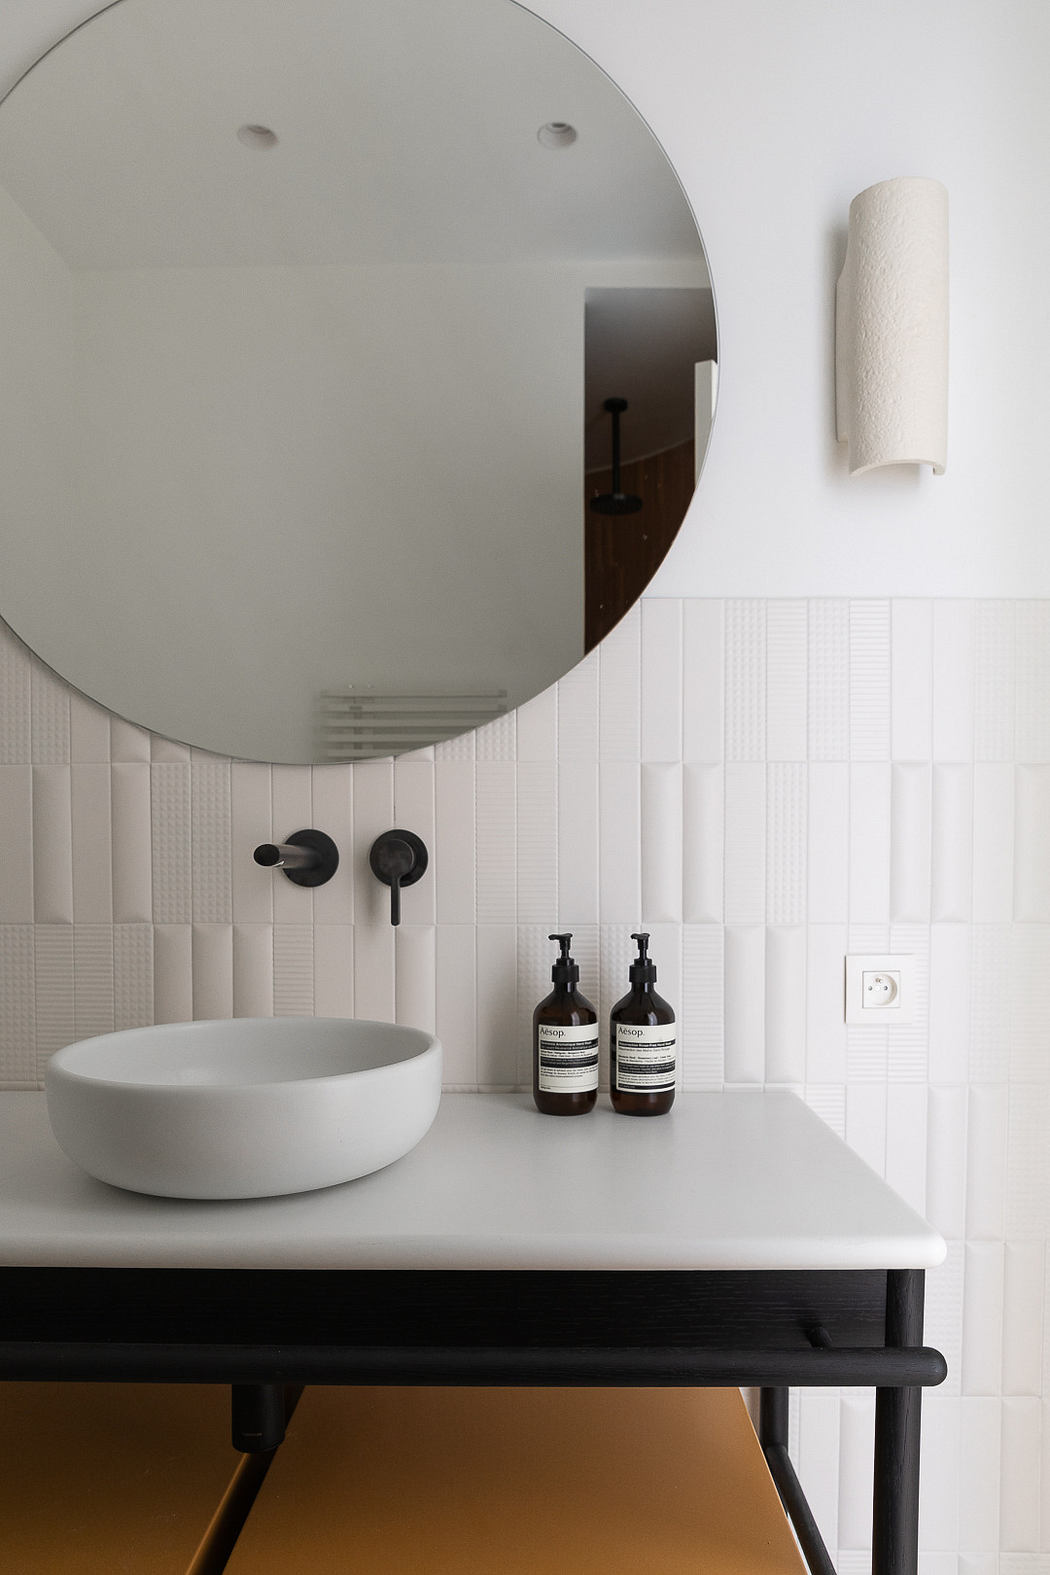 Minimalist bathroom with round mirror, white basin, and black fixtures.